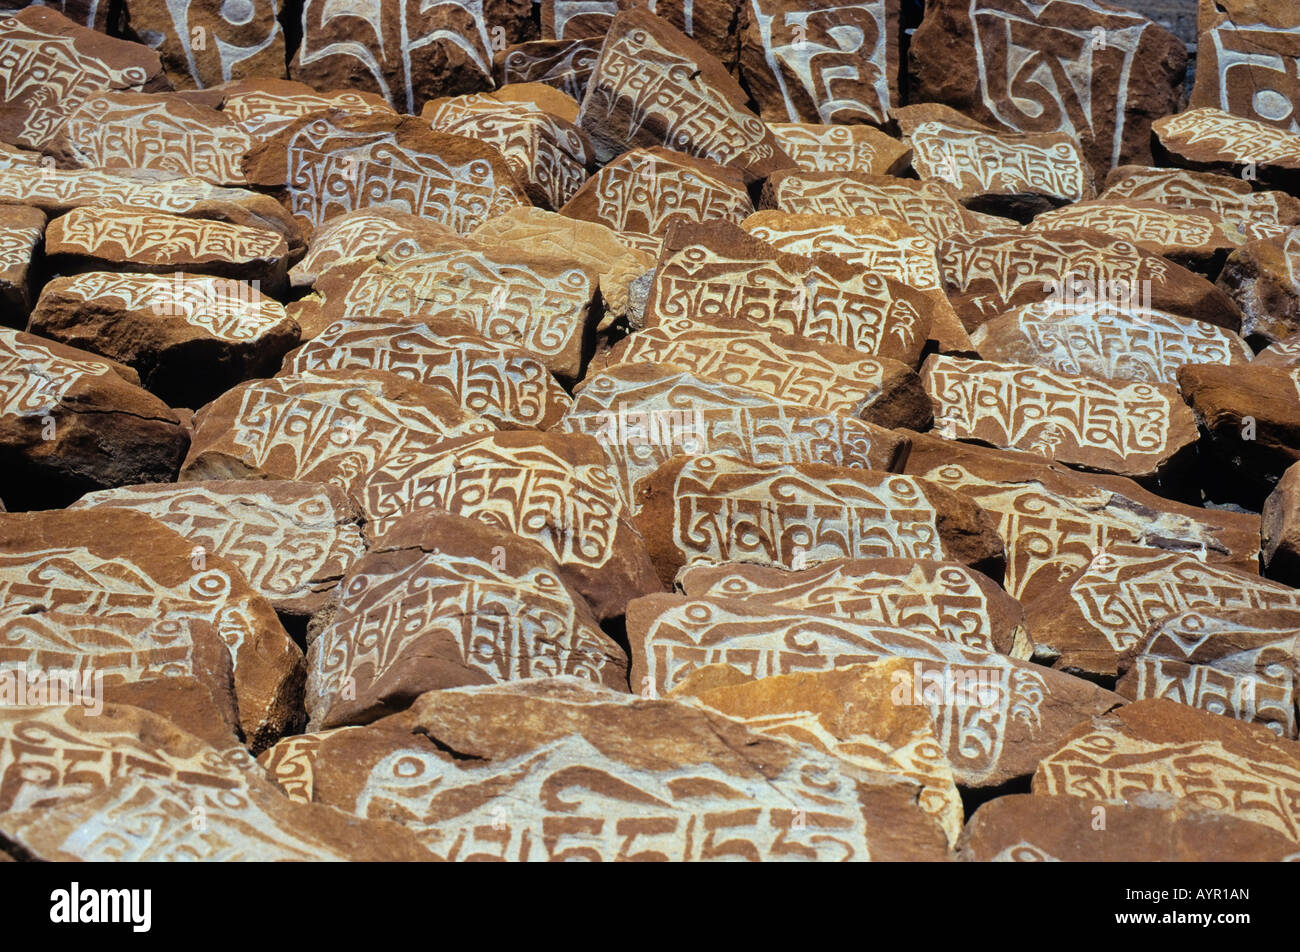 Mani rocks with Buddhist inscriptions, Himalayas, Ladakh, India Stock Photo